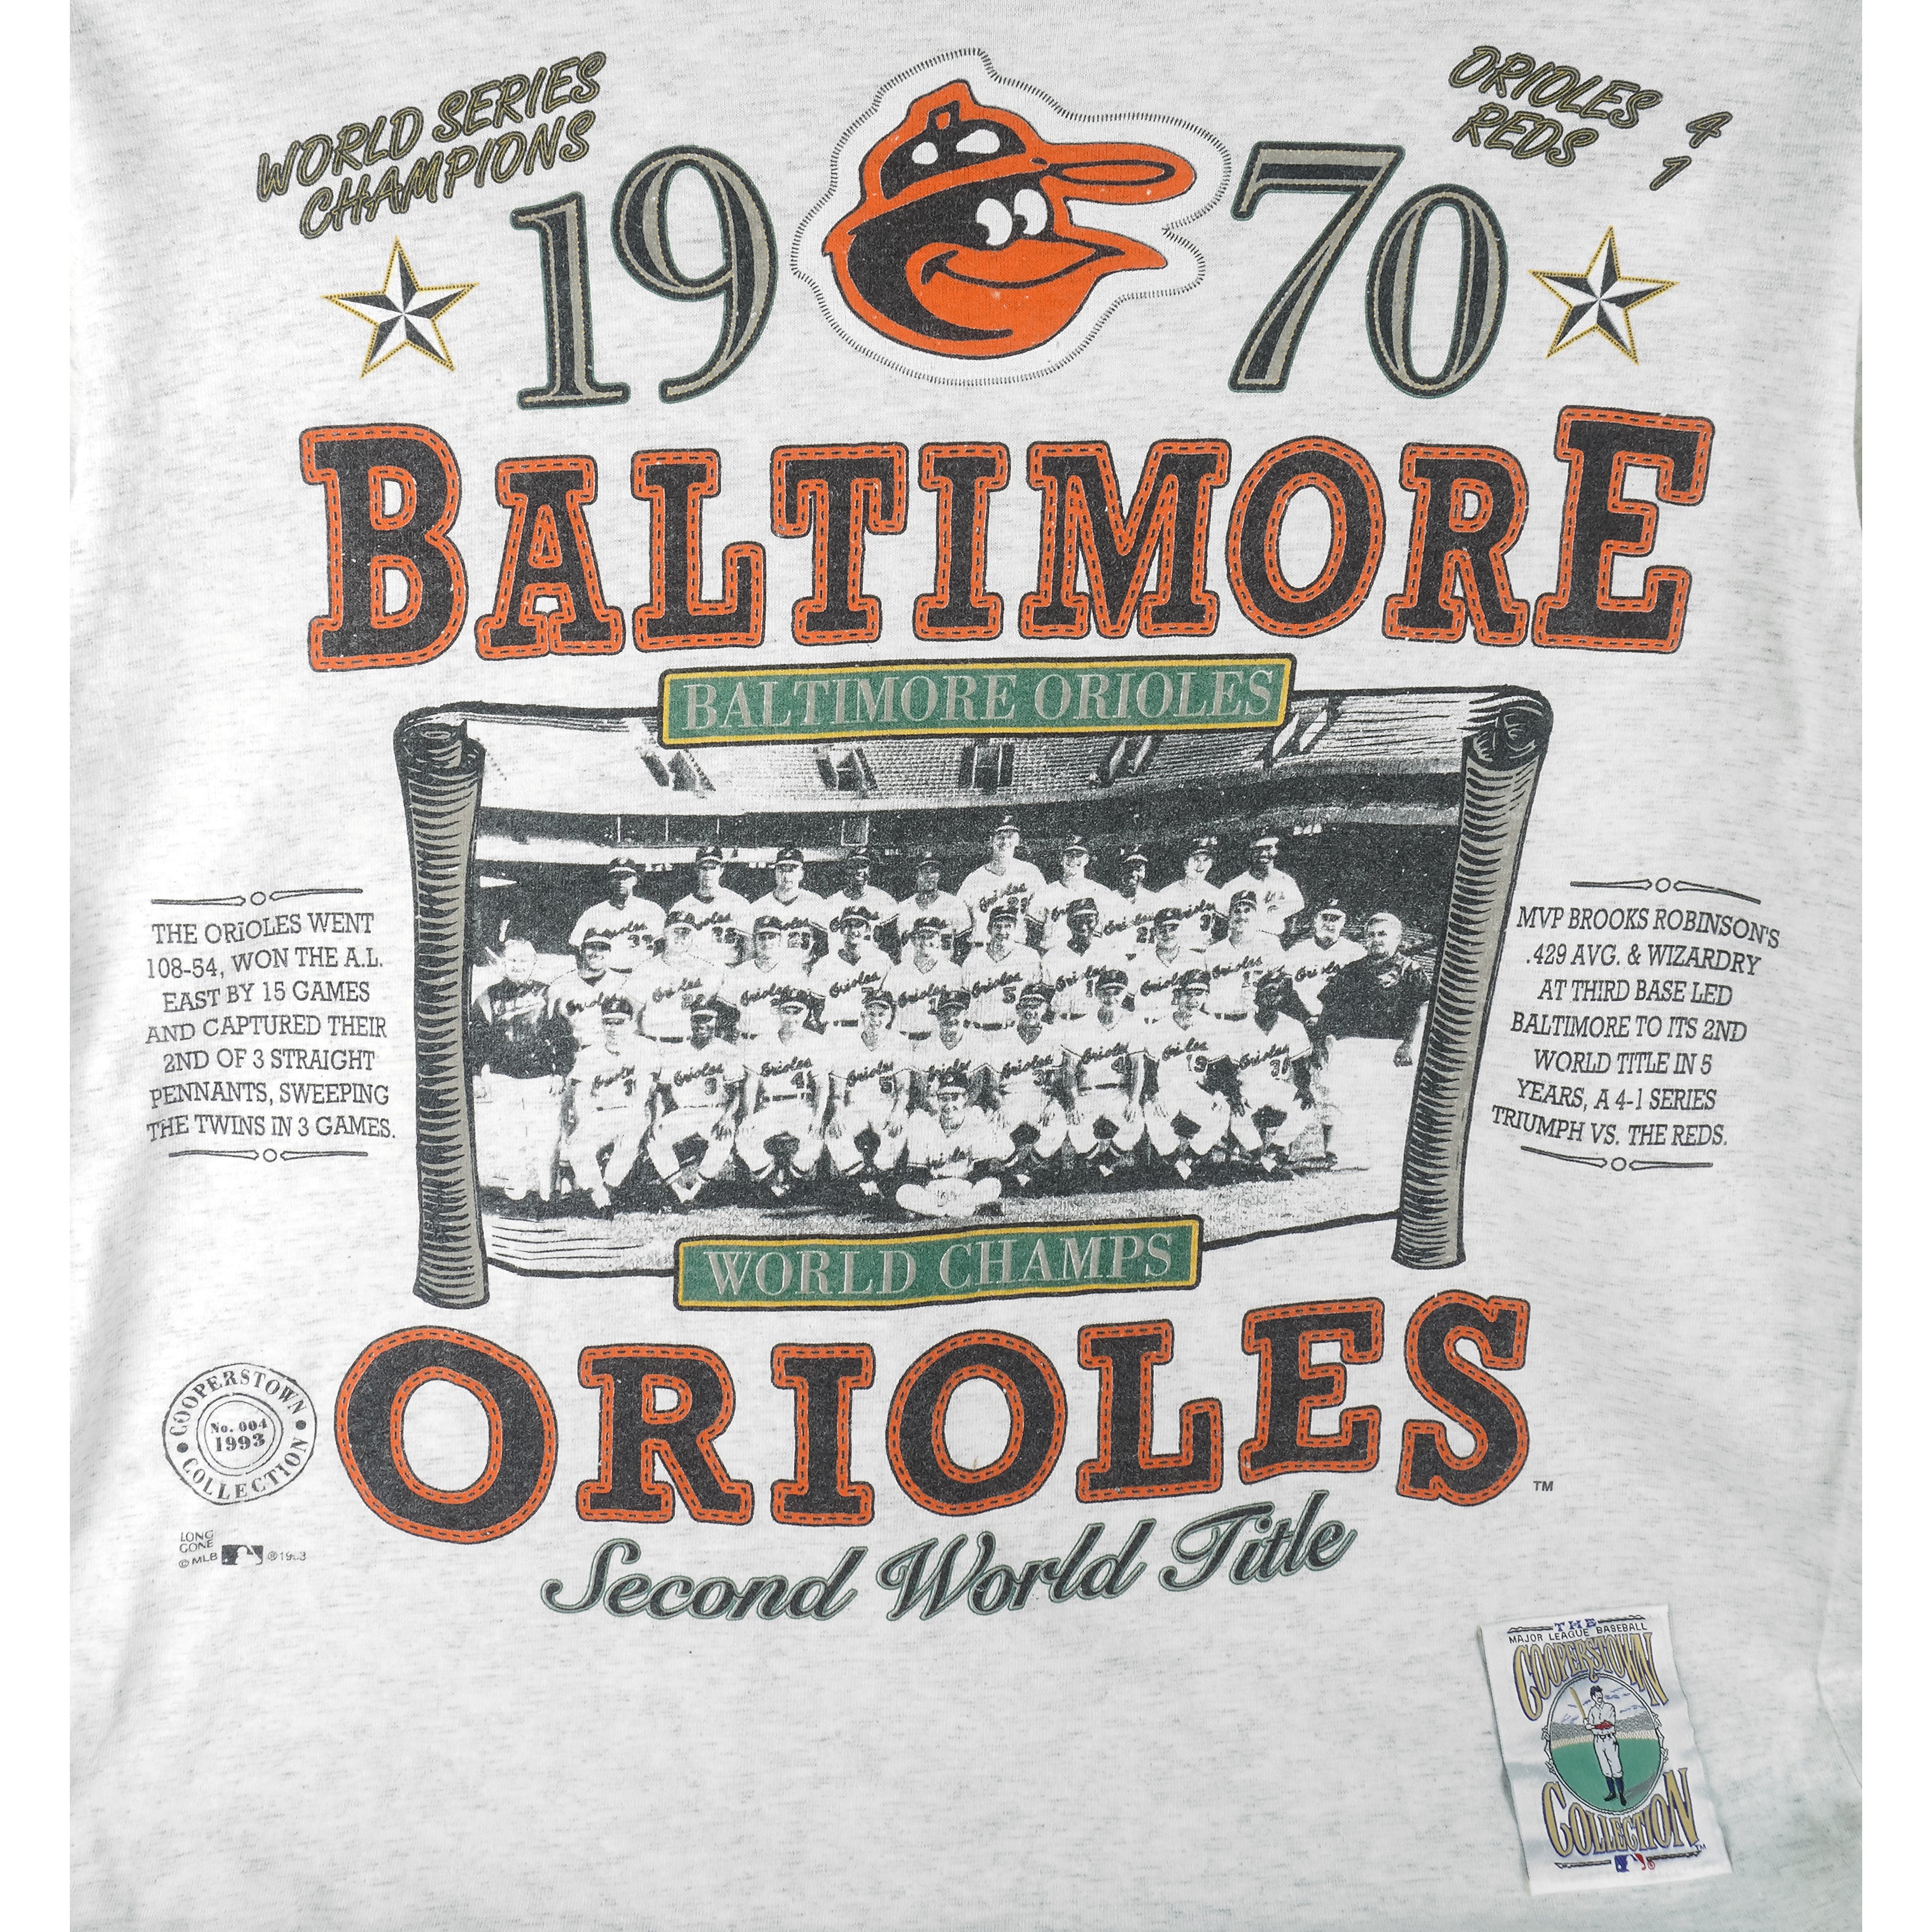 Retro Baltimore Orioles Tee Shirt -  New Zealand